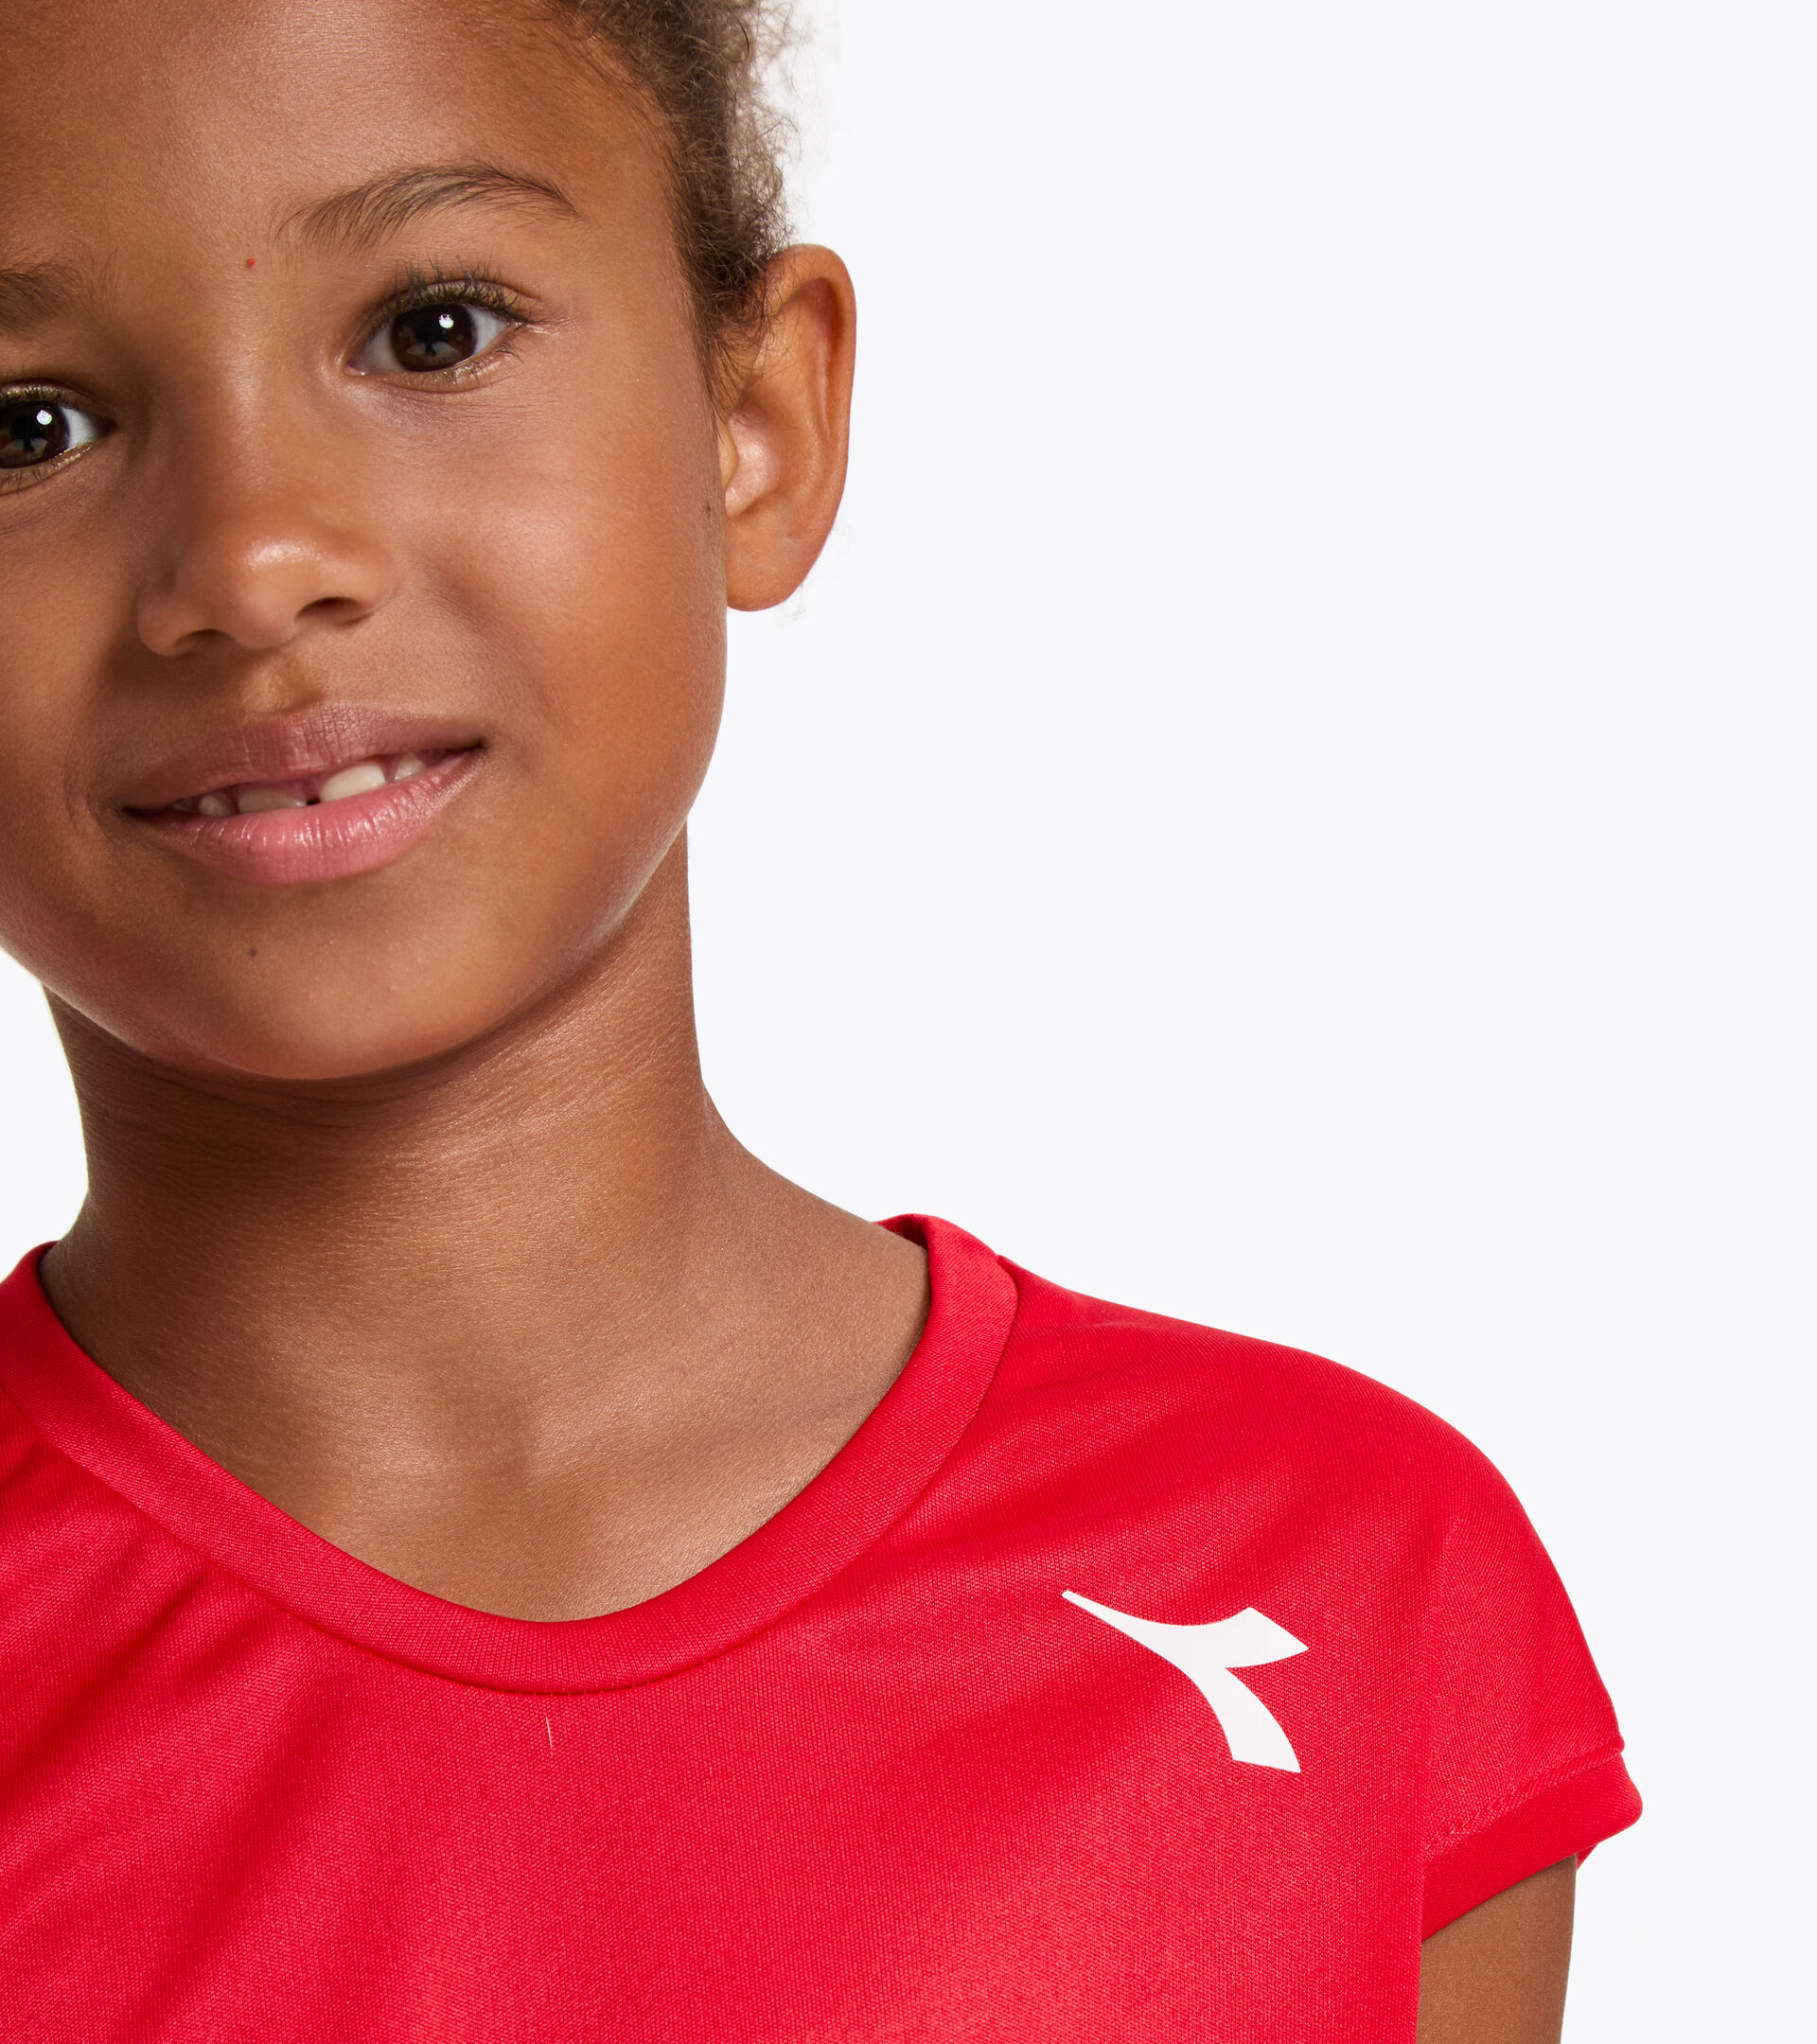 Tennis T-shirt - Junior G. T-SHIRT TEAM TOMATO RED - Diadora